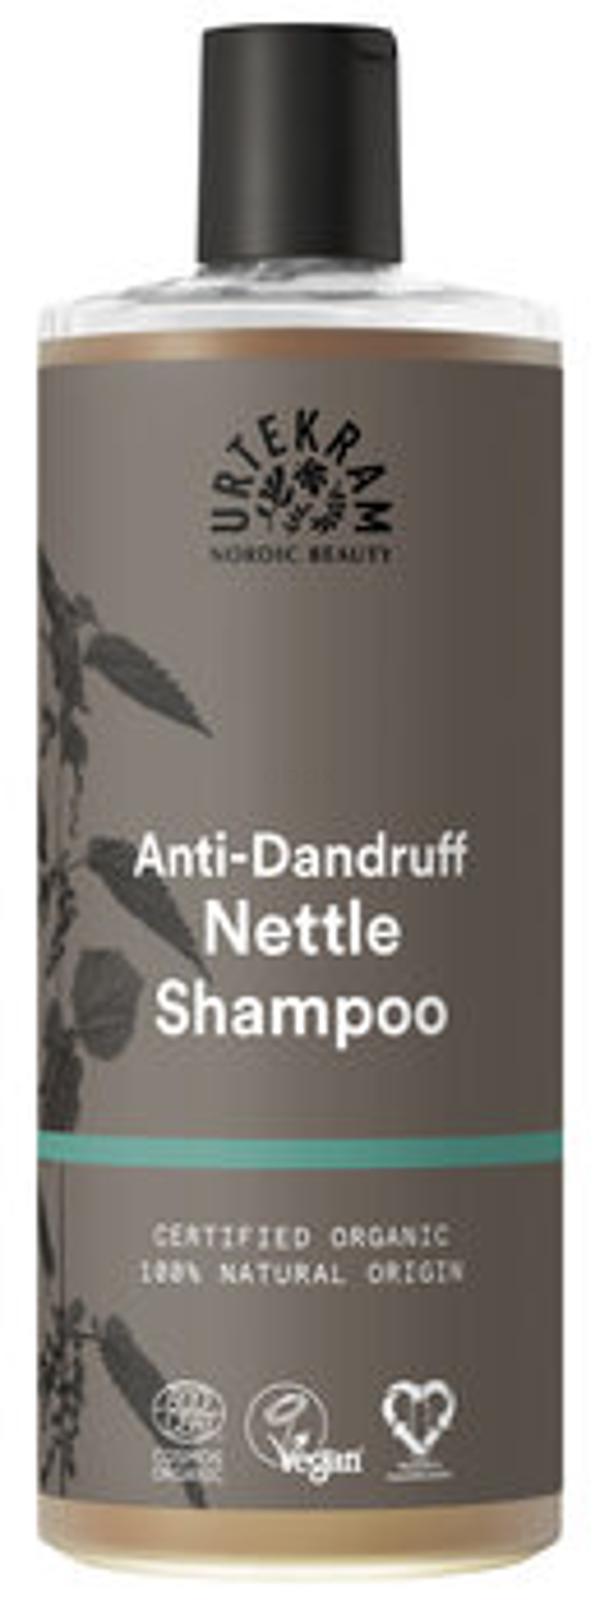 Produktfoto zu Shampoo Brennessel 500ml